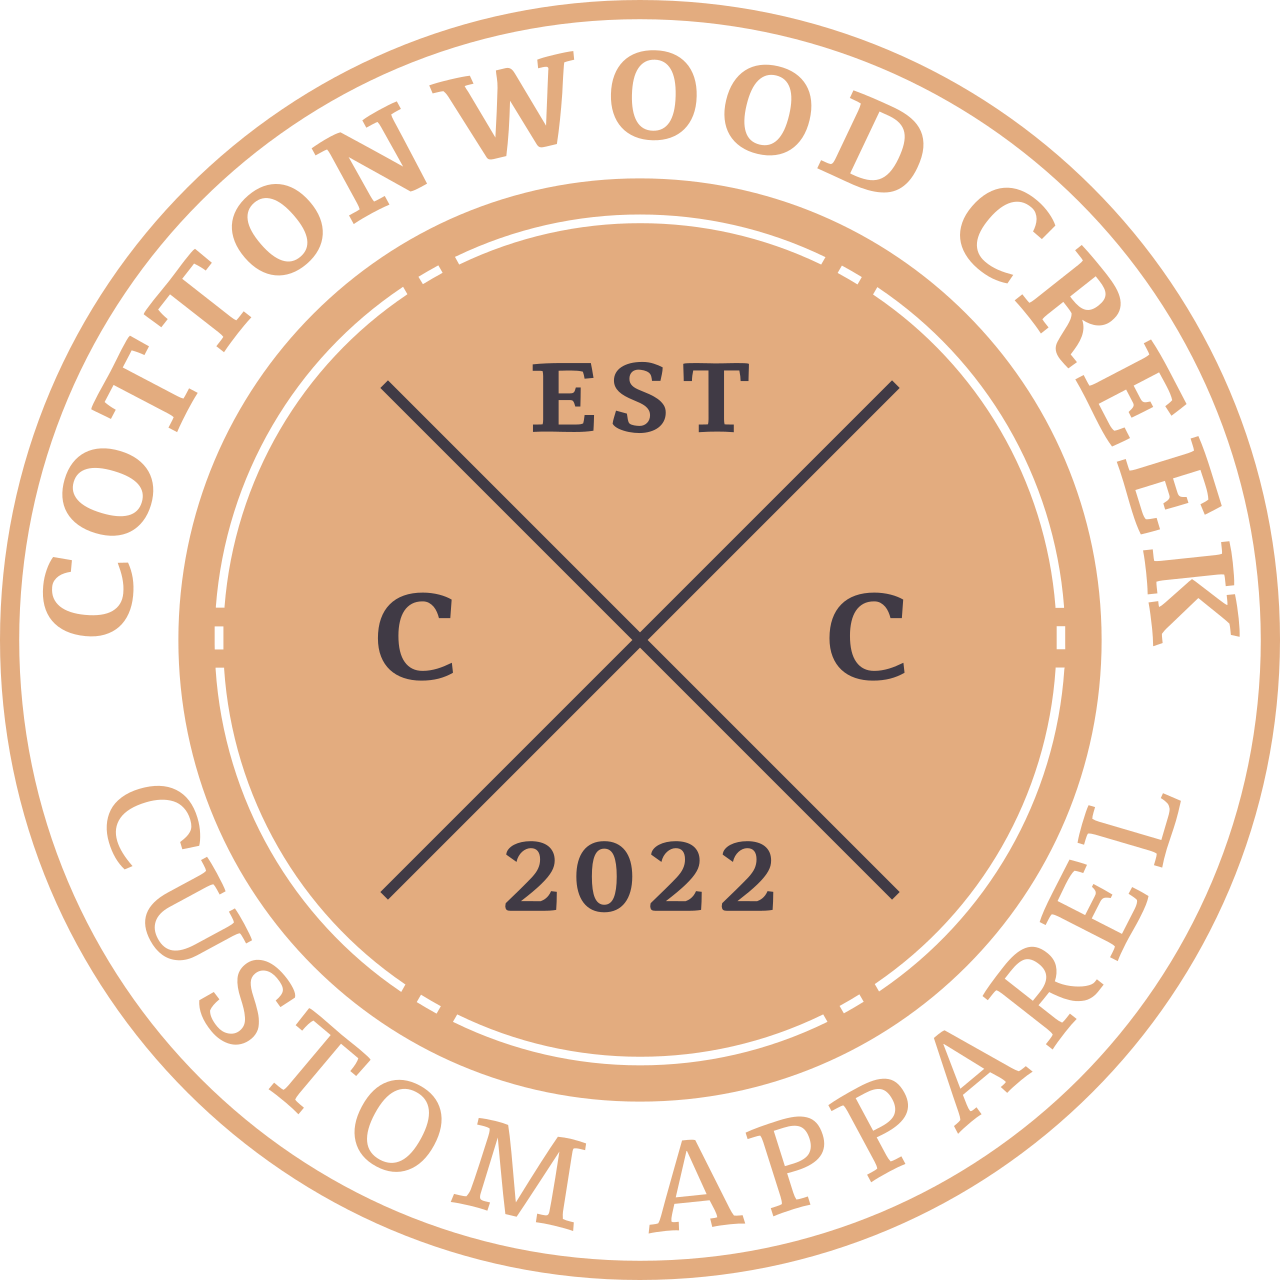 COTTONWOOD CREEK's web page